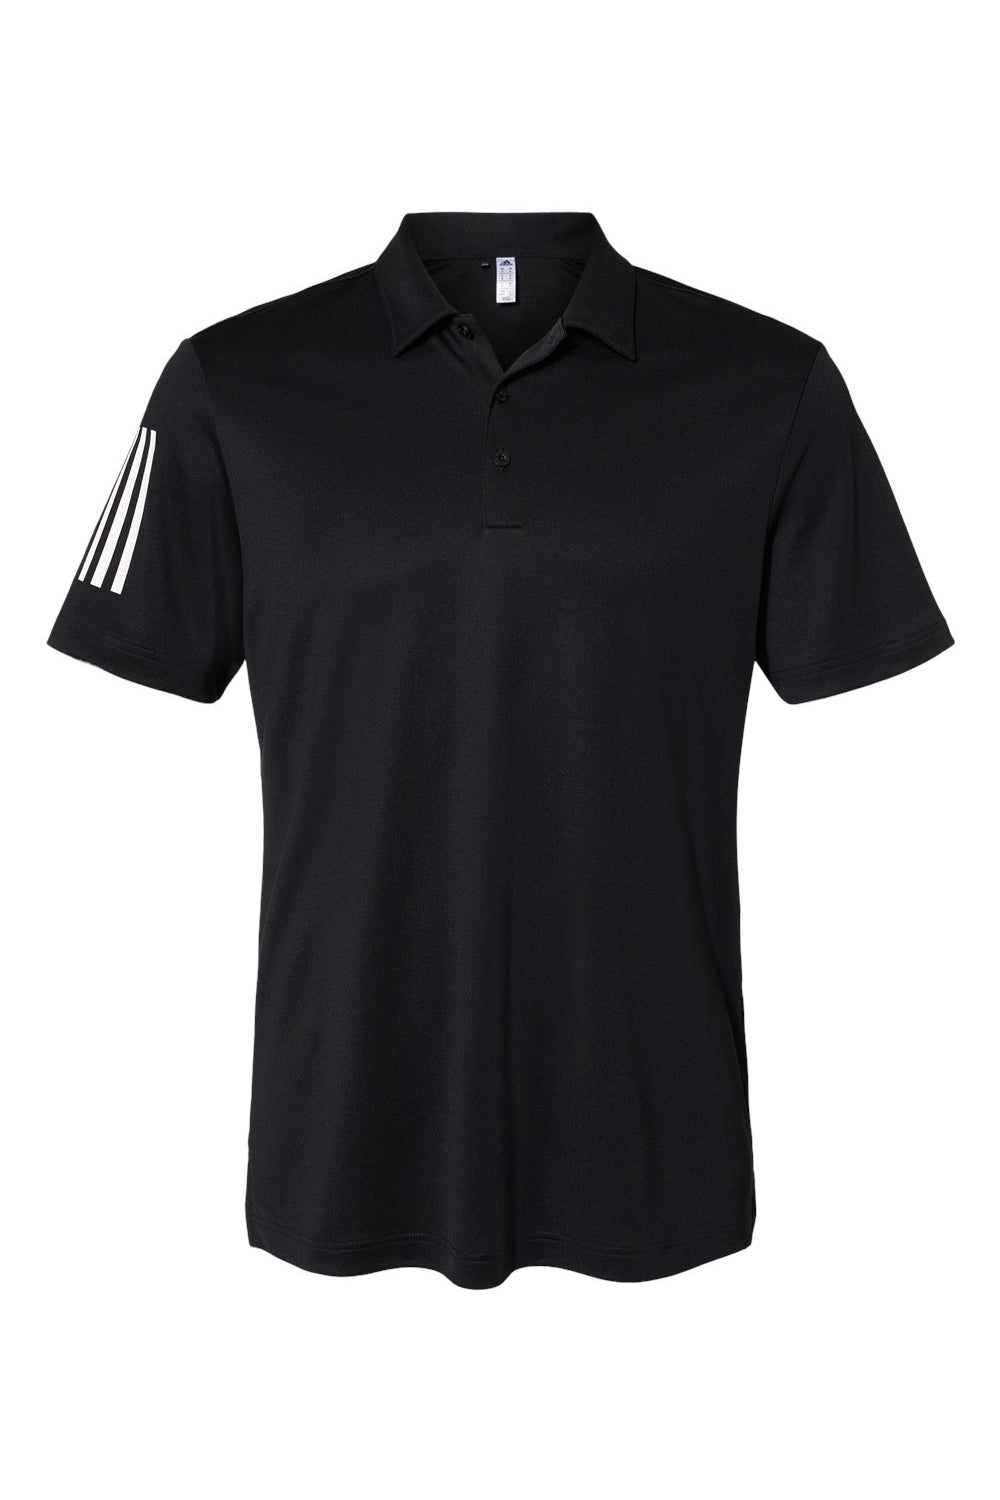 Adidas A480 Mens Floating 3 Stripes UPF 50+ Short Sleeve Polo Shirt Black Flat Front